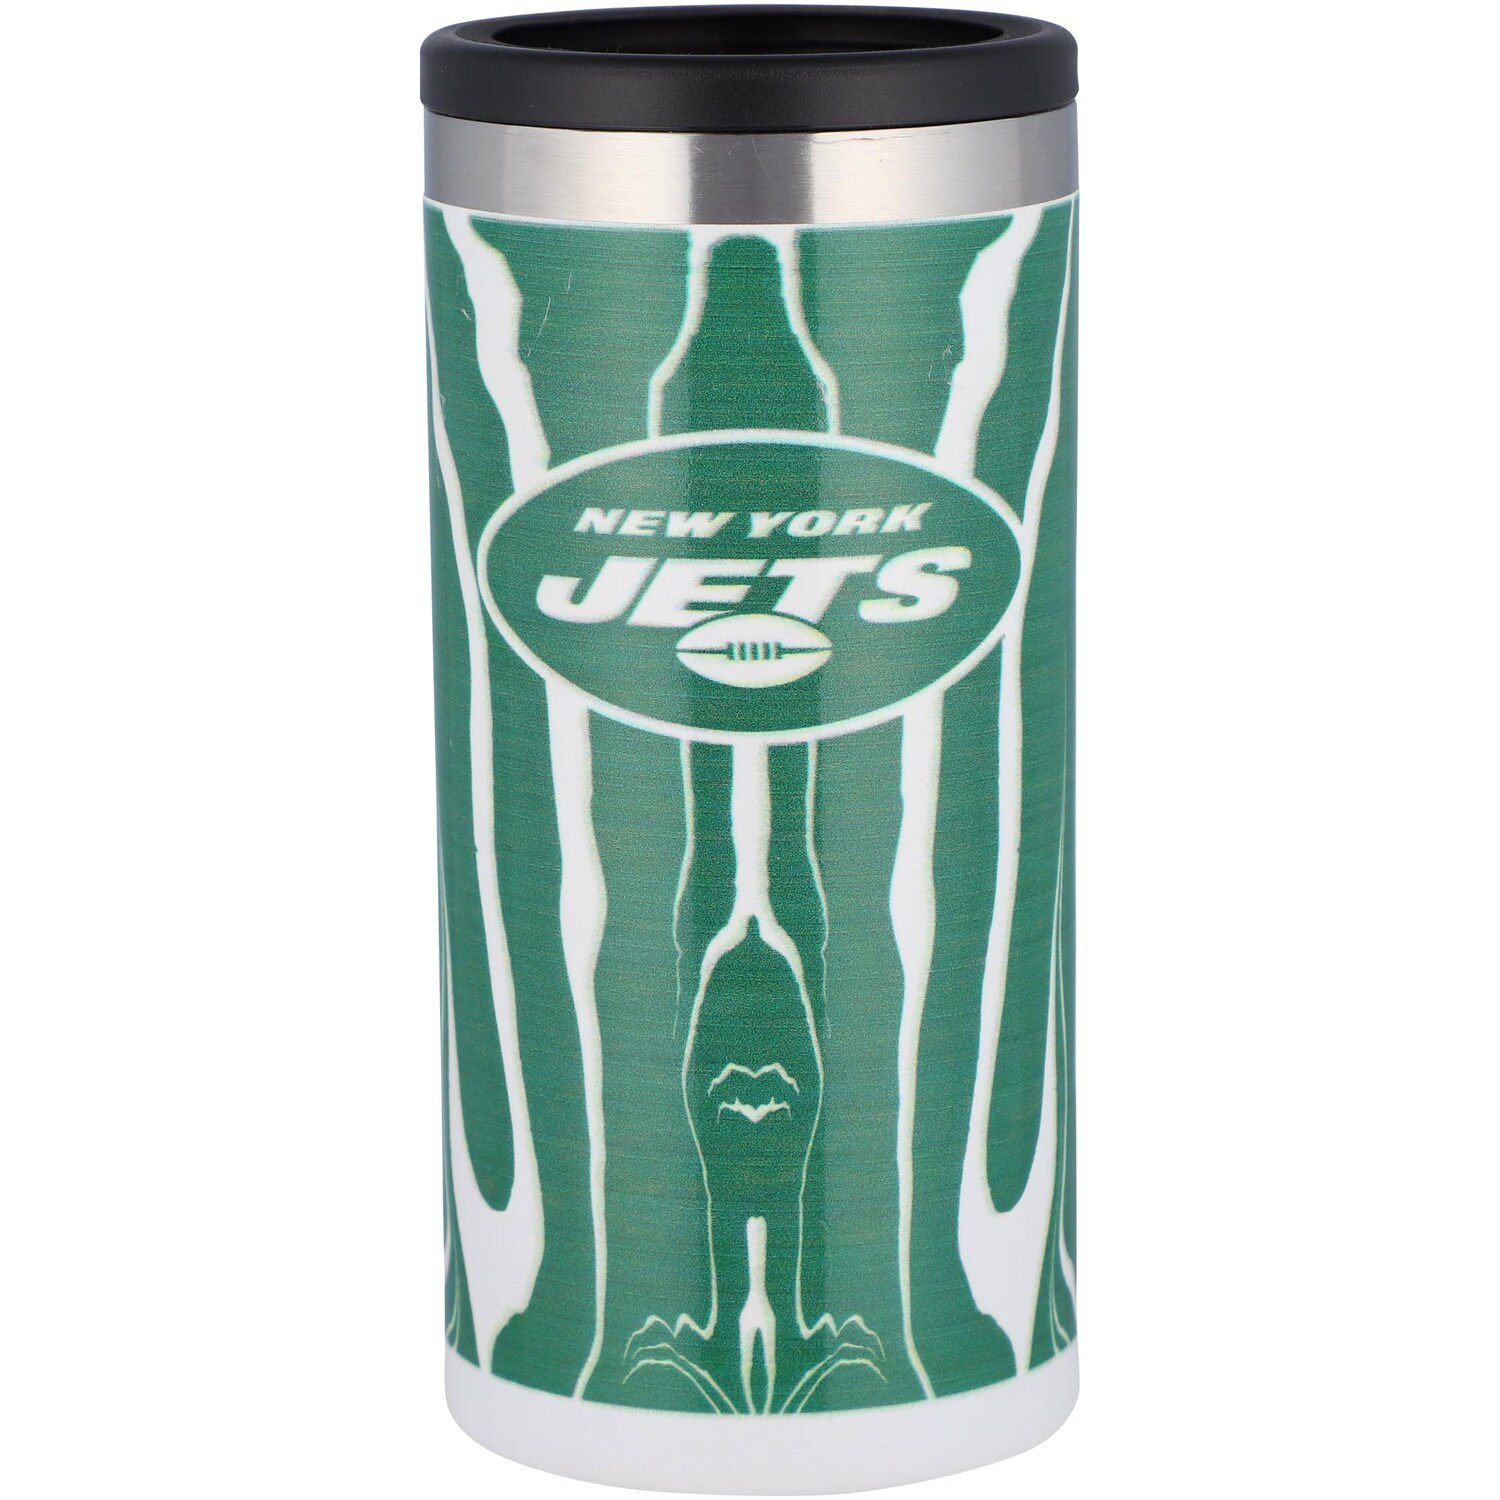 Image for Unbranded New York Jets 12oz. Tie-Dye Slim Can Holder at Kohl's.